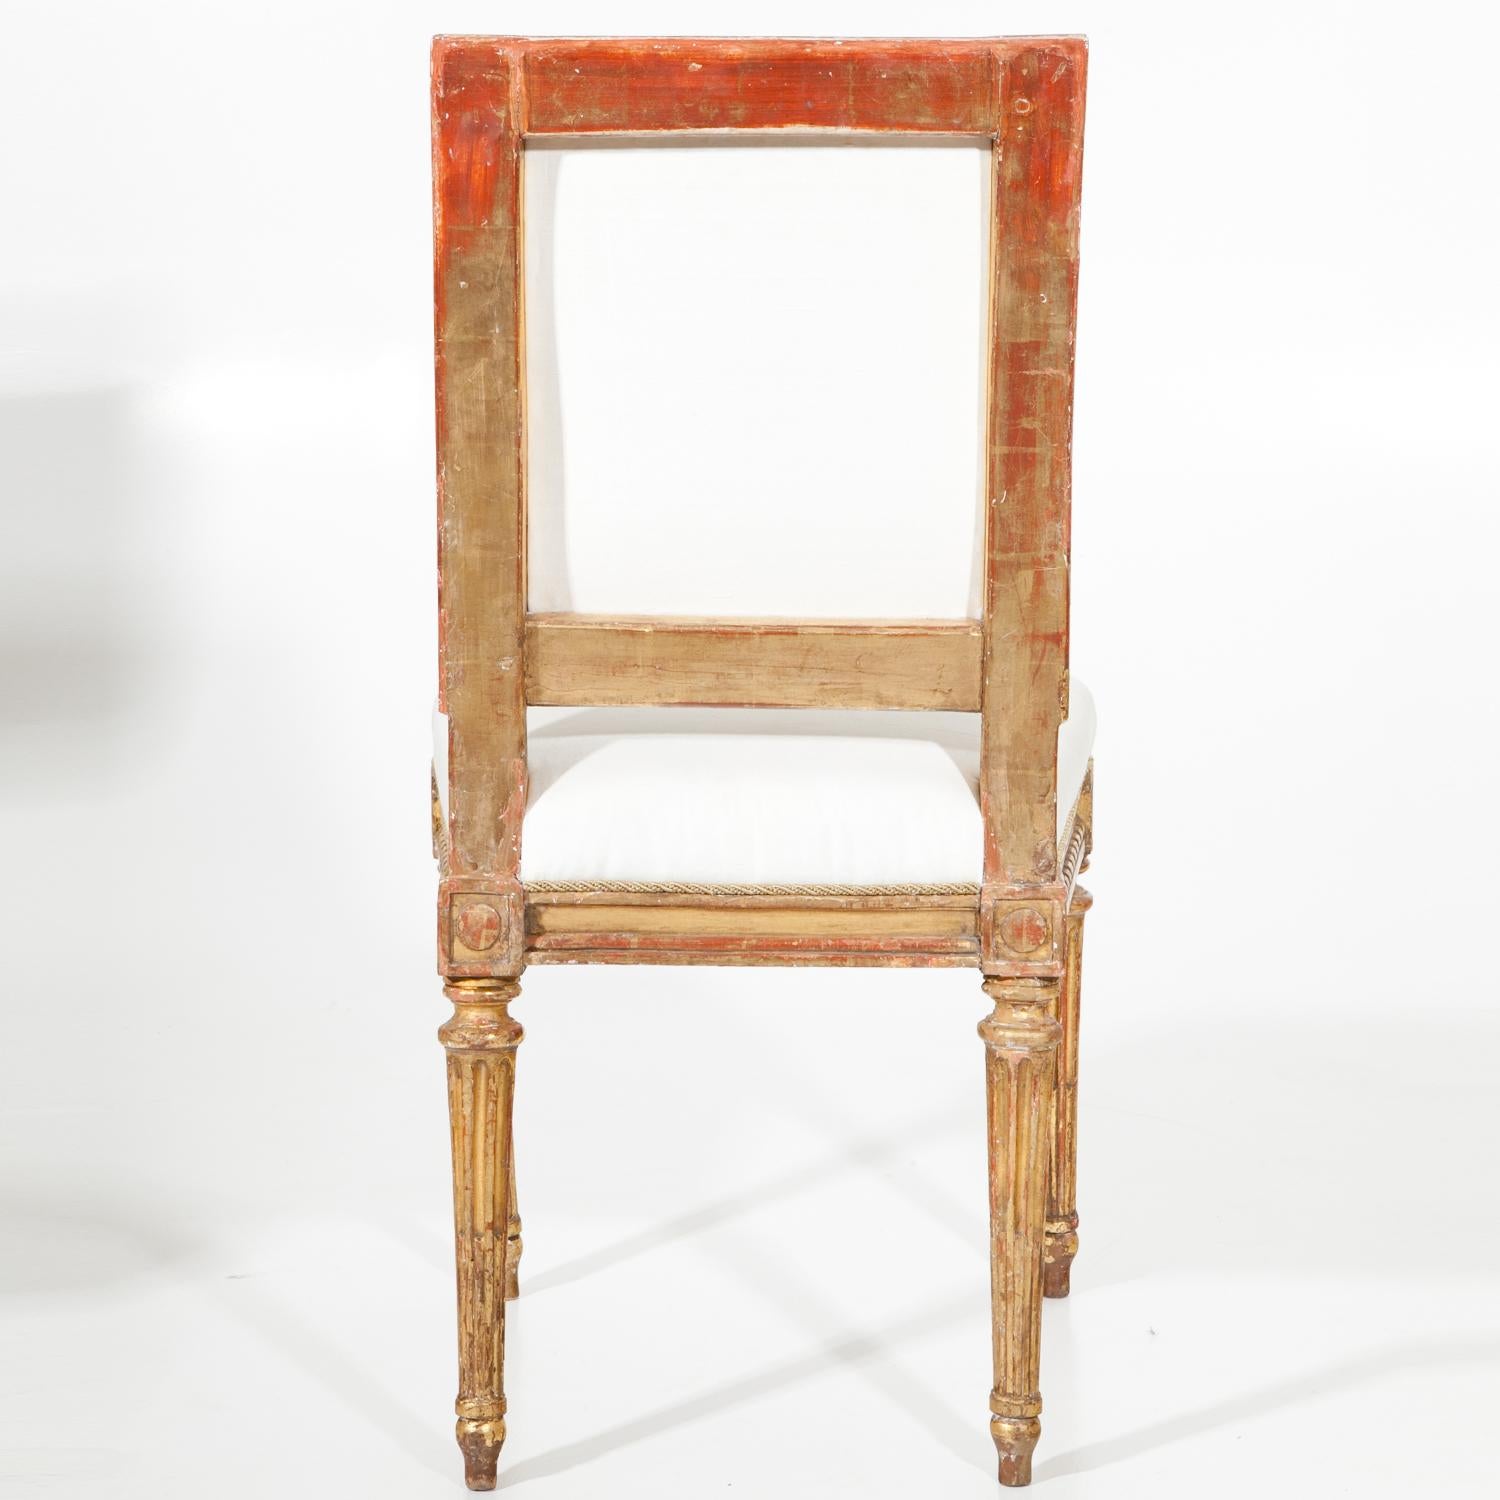 French Louis Seize Children’s Chair by J. B. Boulard, France, circa 1770 For Sale